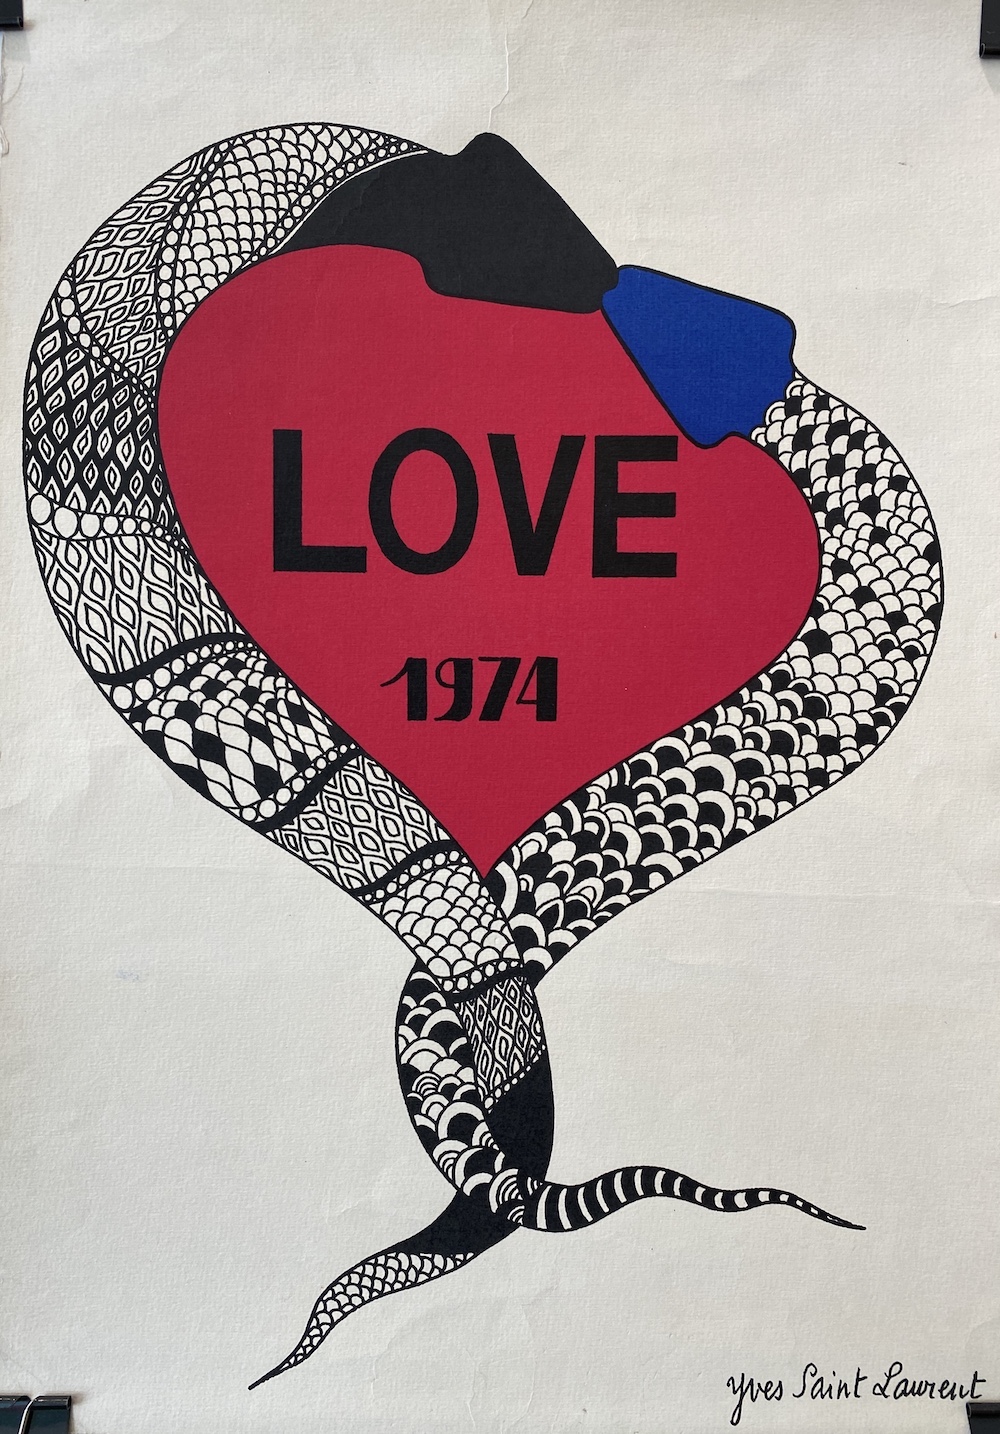 Yves Saint Laurent LOVE 1974 Original Vintage Poster